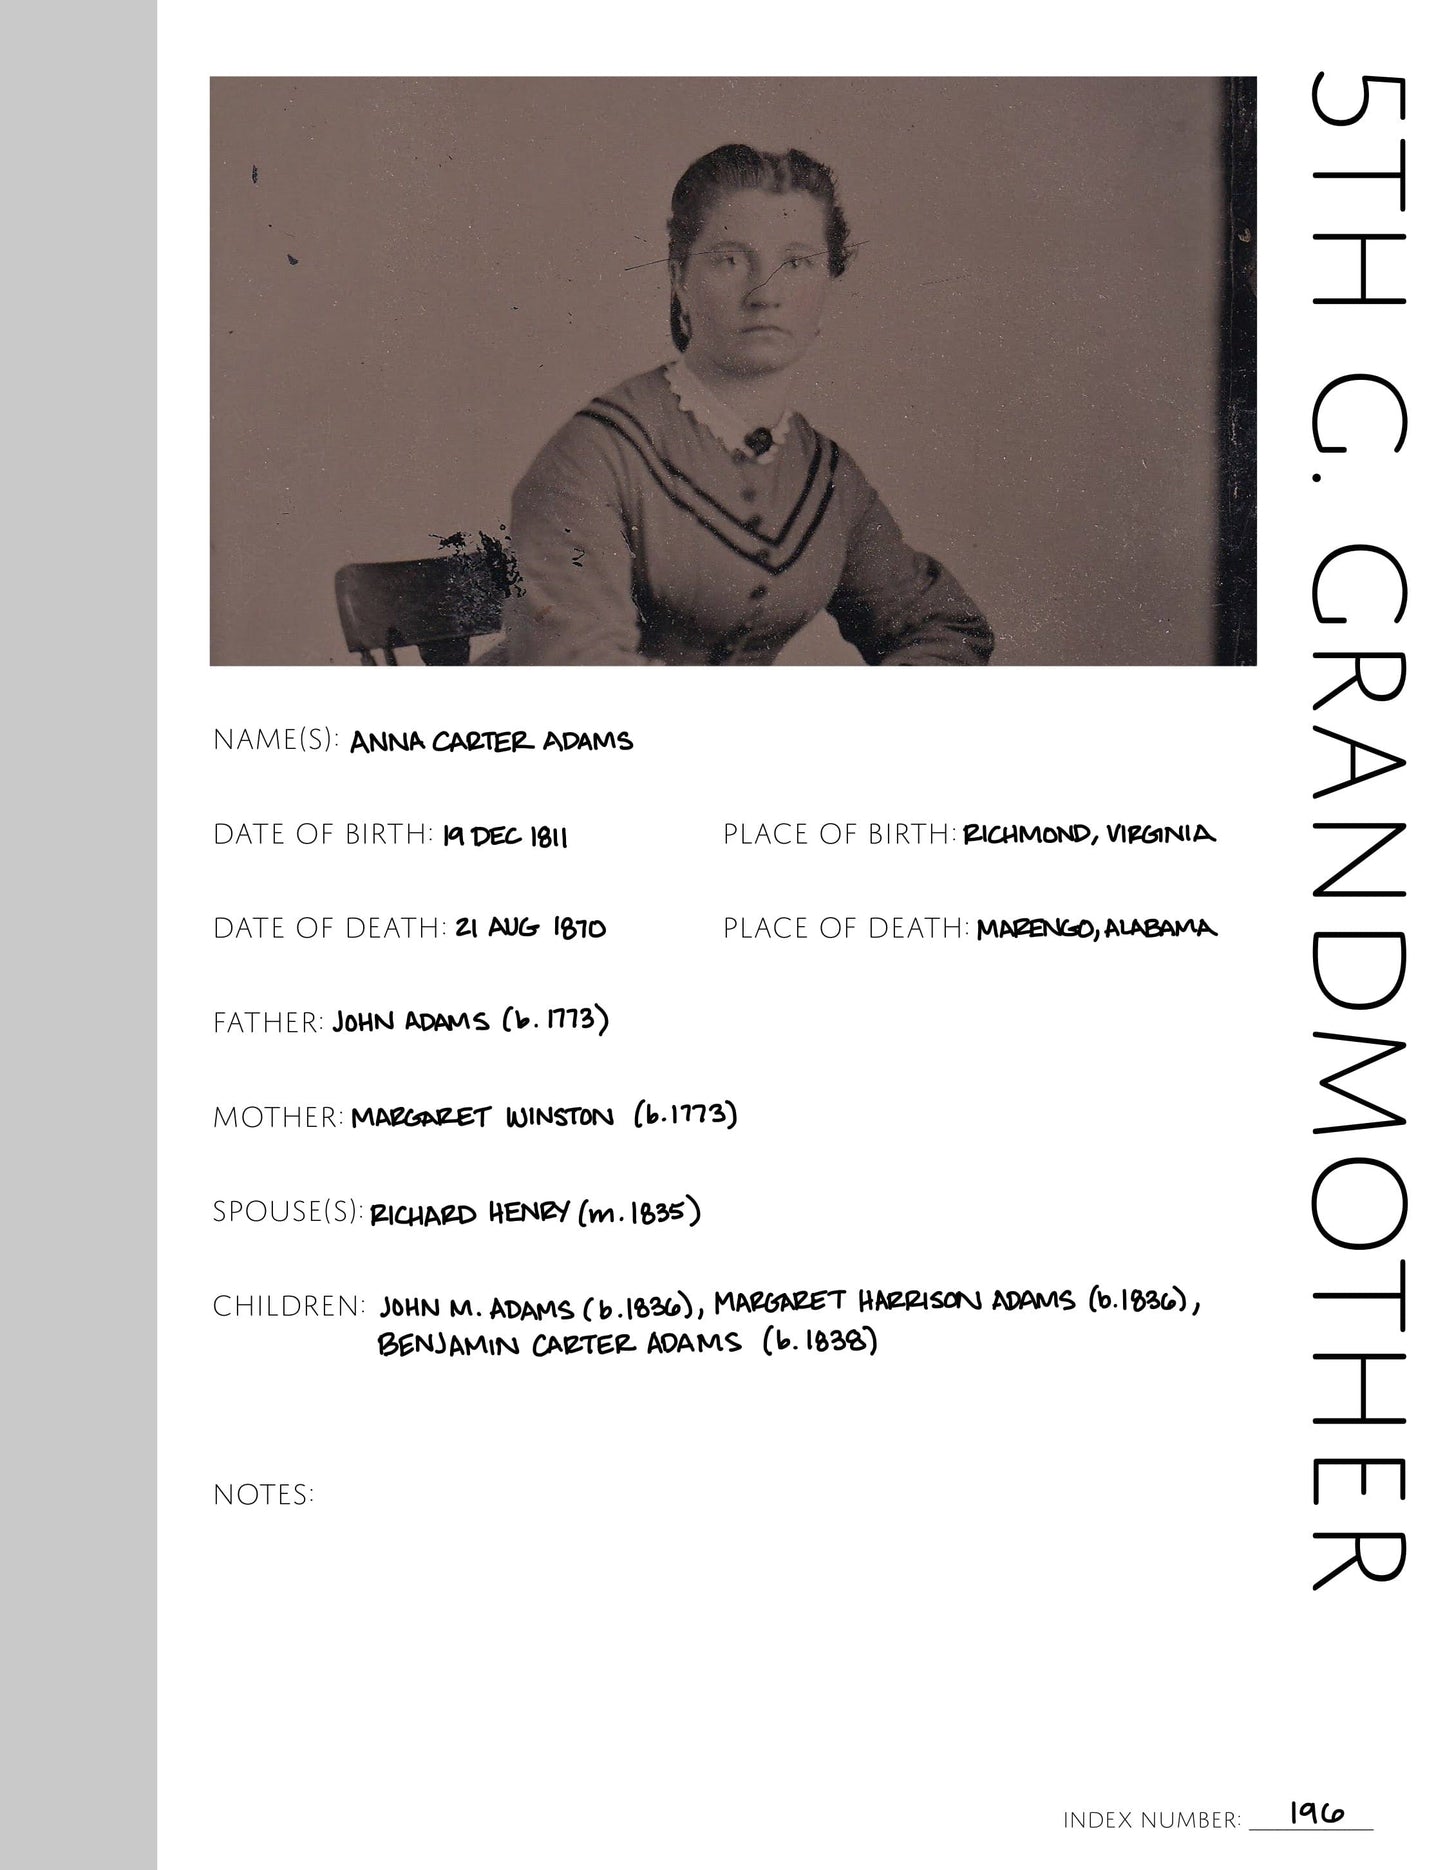 5th Great Grandmother Profile: Printable Genealogy Form (Digital Download)